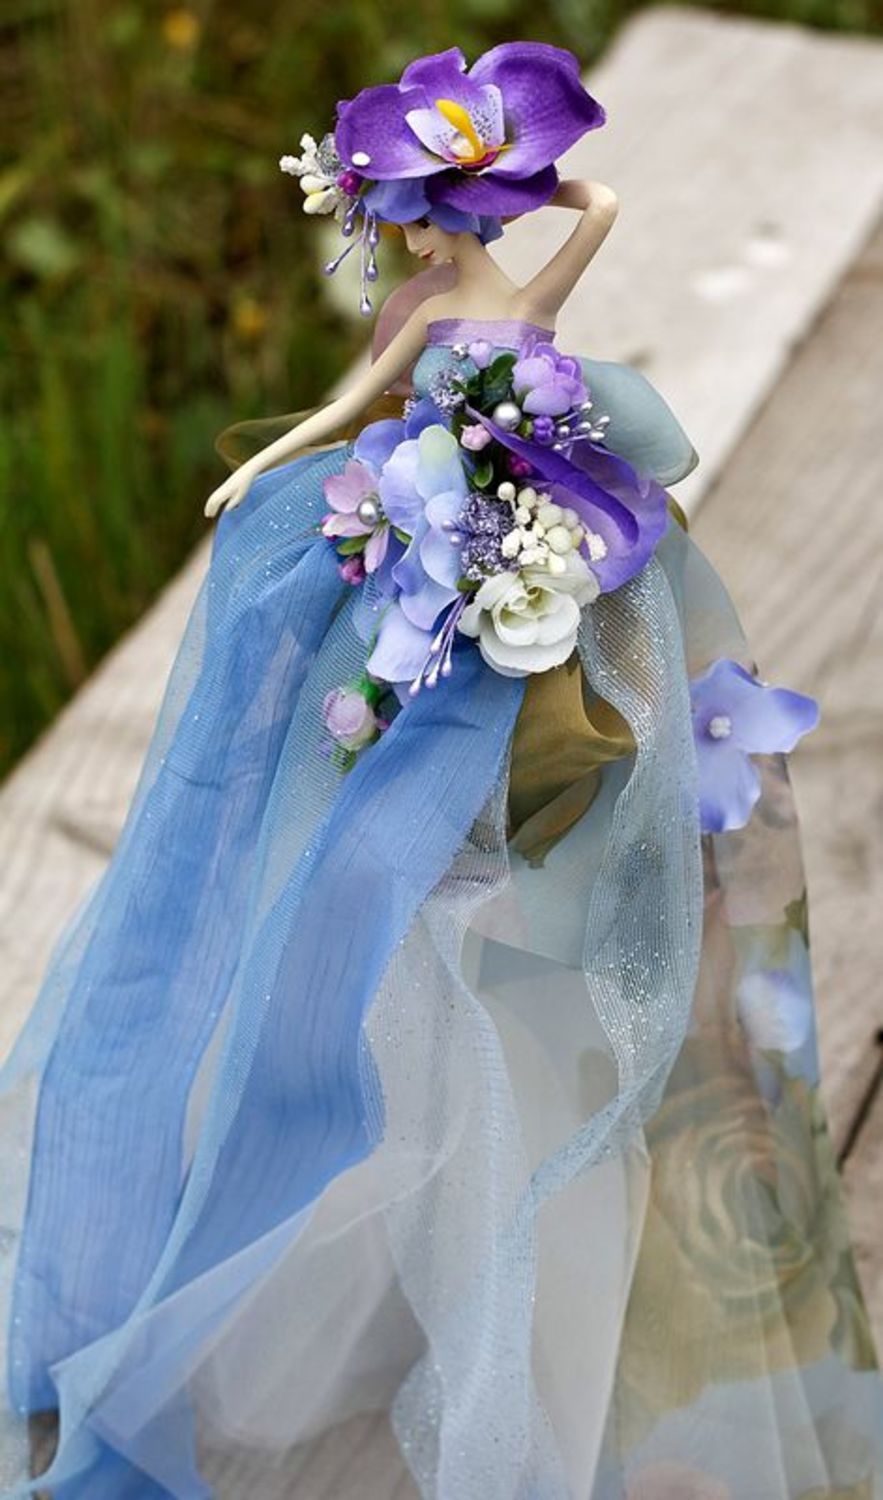 Poupée faite main pour mariage en robe bleue photo 4